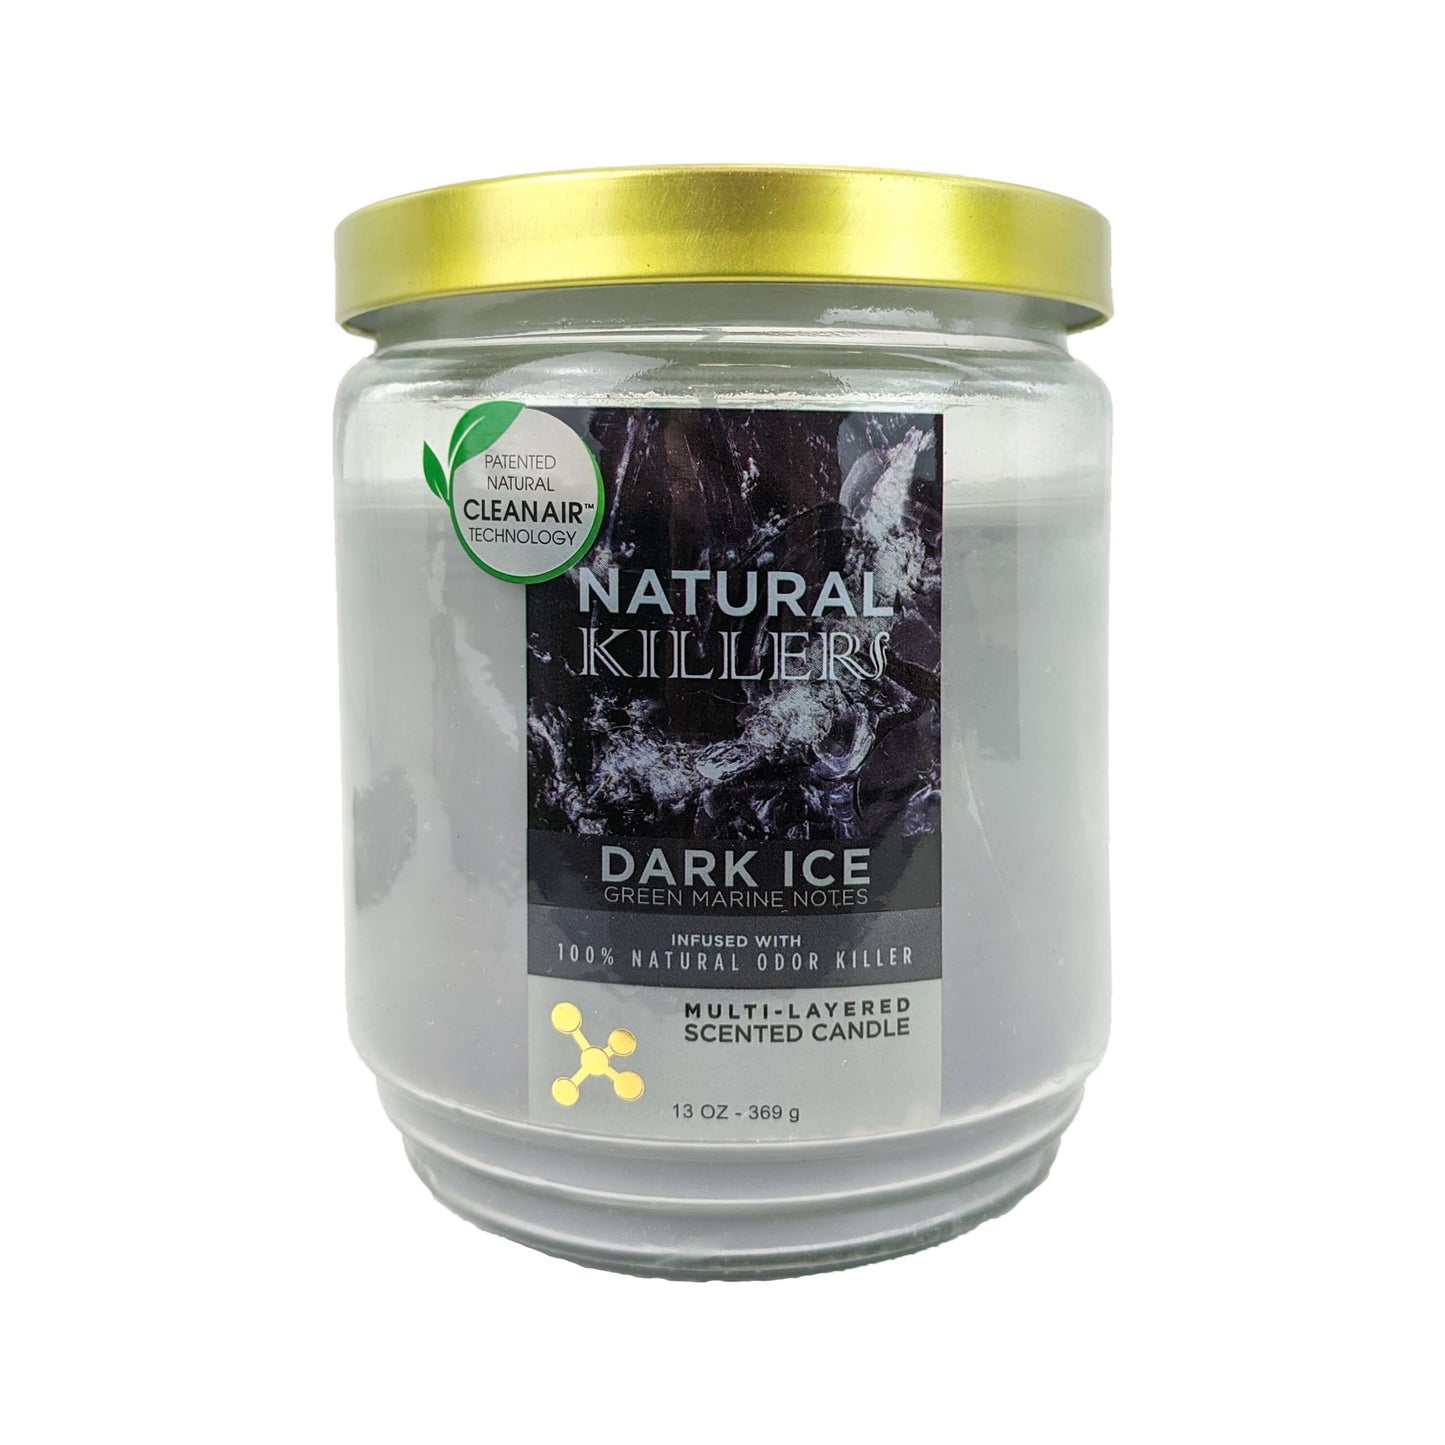 Natural Killers Odor-Killing Scented 13oz Candle, Dark Ice Scent